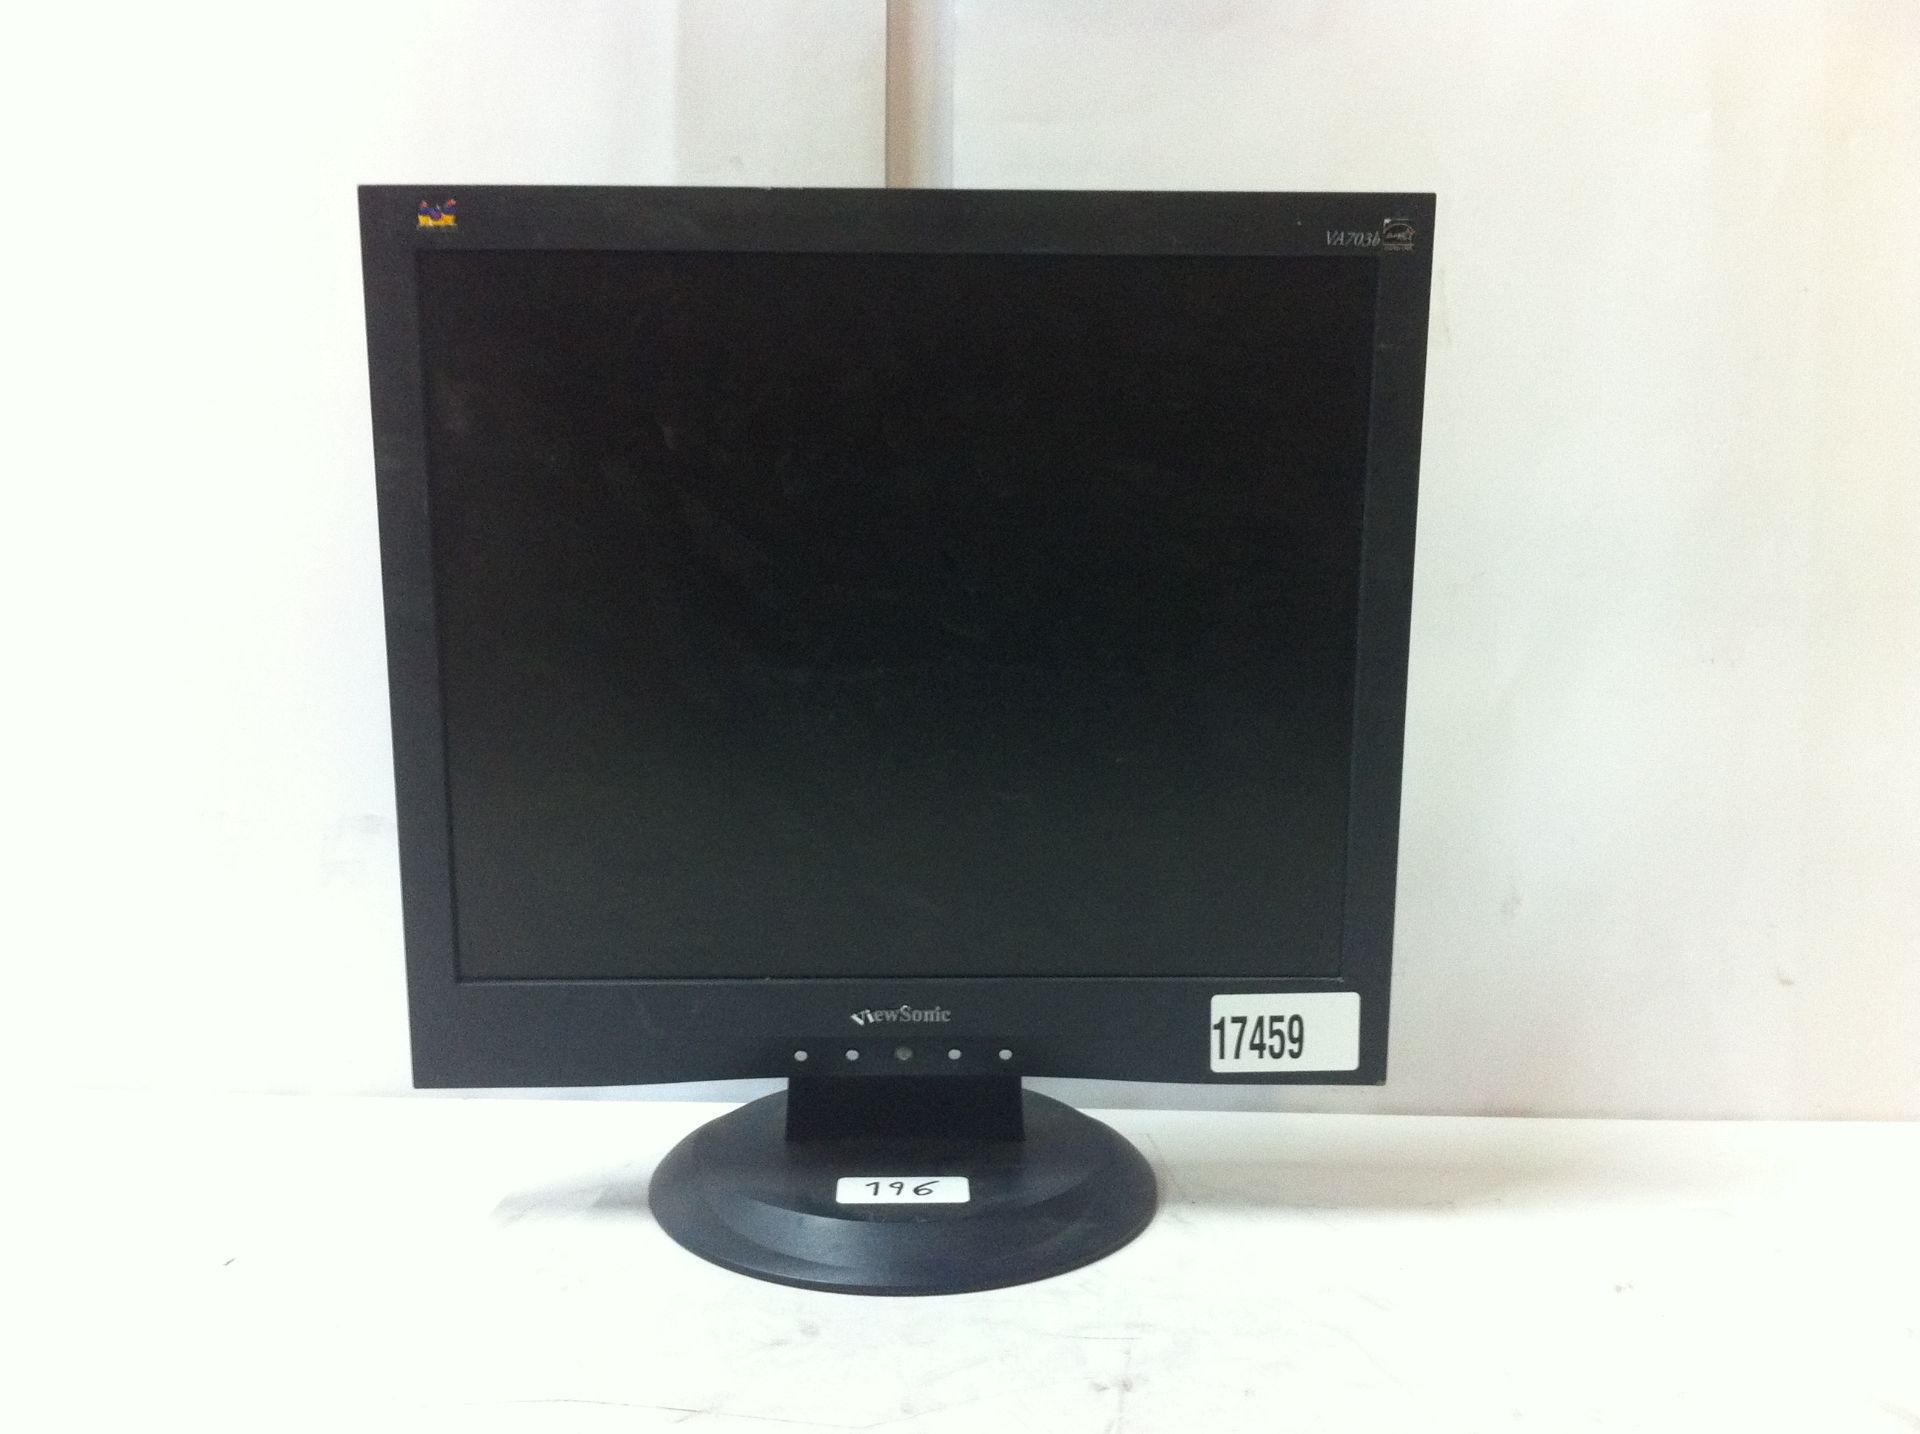 7 x ViewSonic Computer Monitors. See description - Image 5 of 13